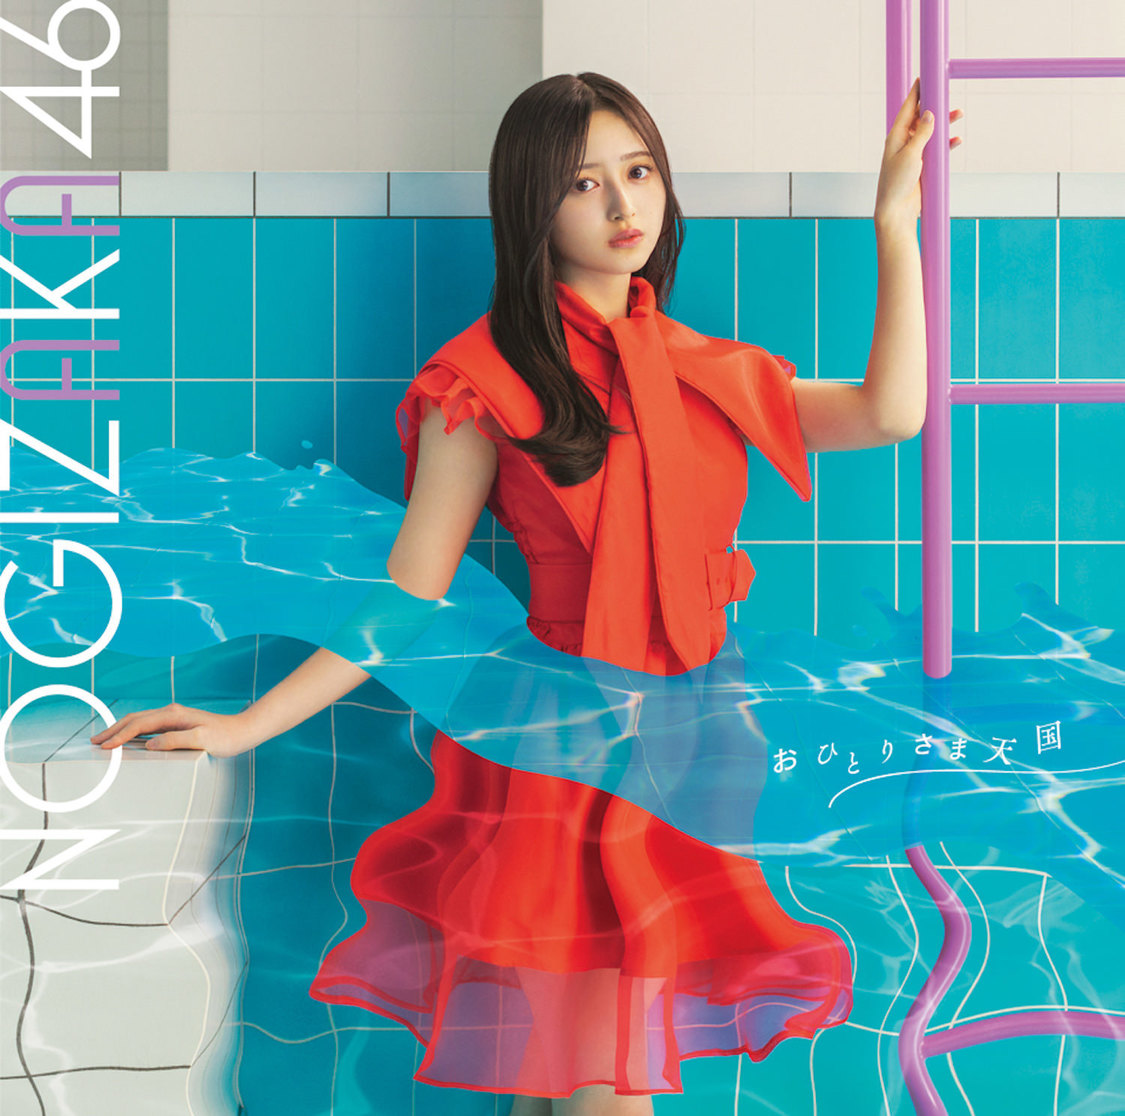 Nogizaka46 — Ohitorisama Tengoku cover artwork